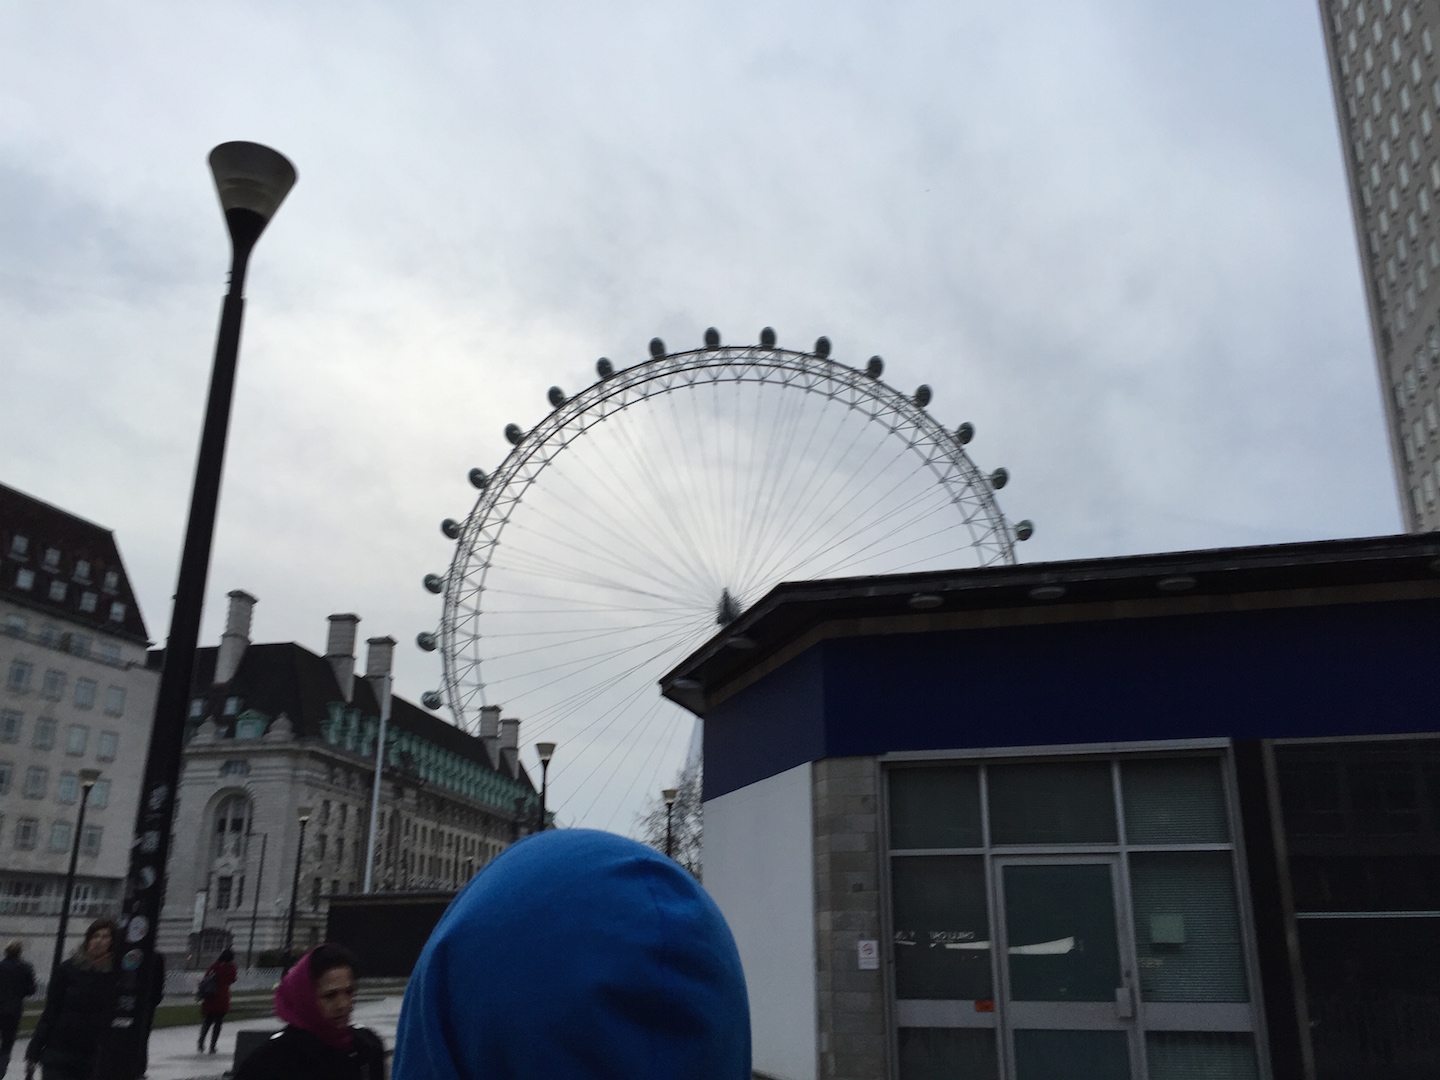 The London Eye!